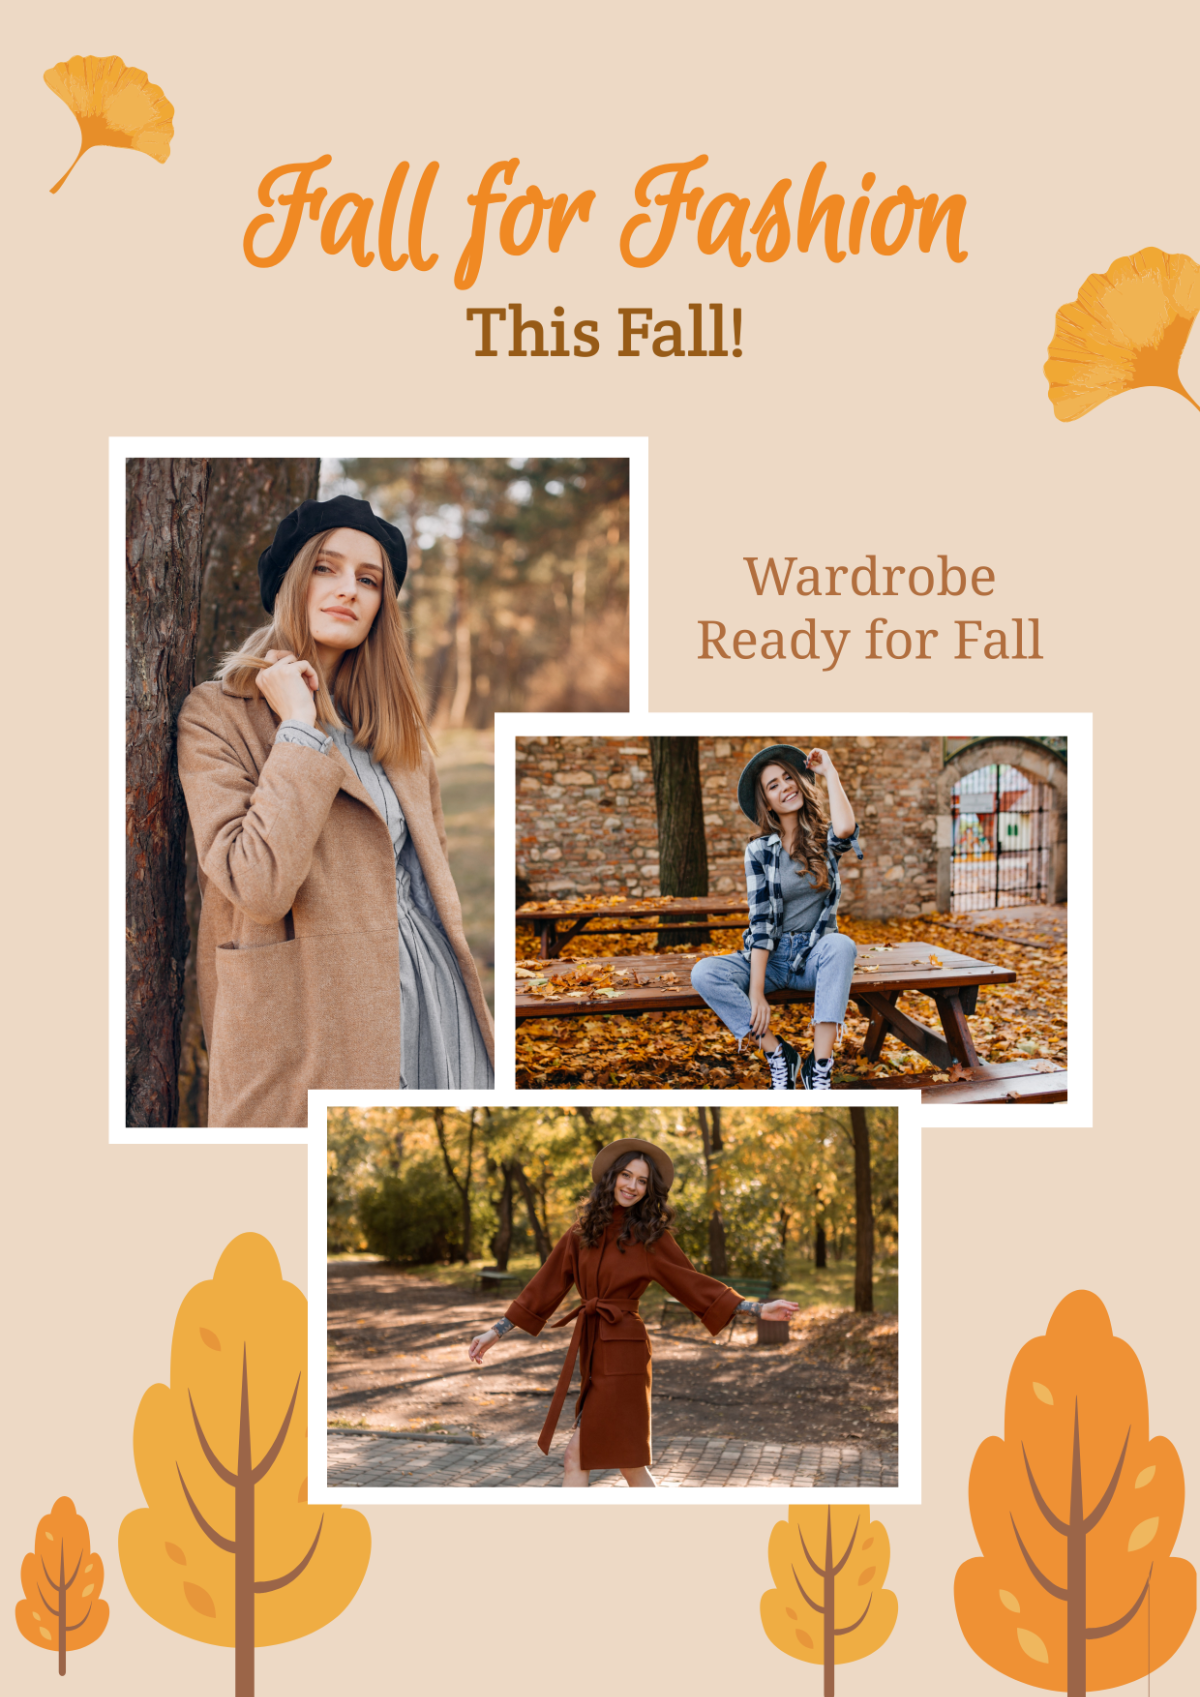 Fall Fashion Sale Photo Collage Template